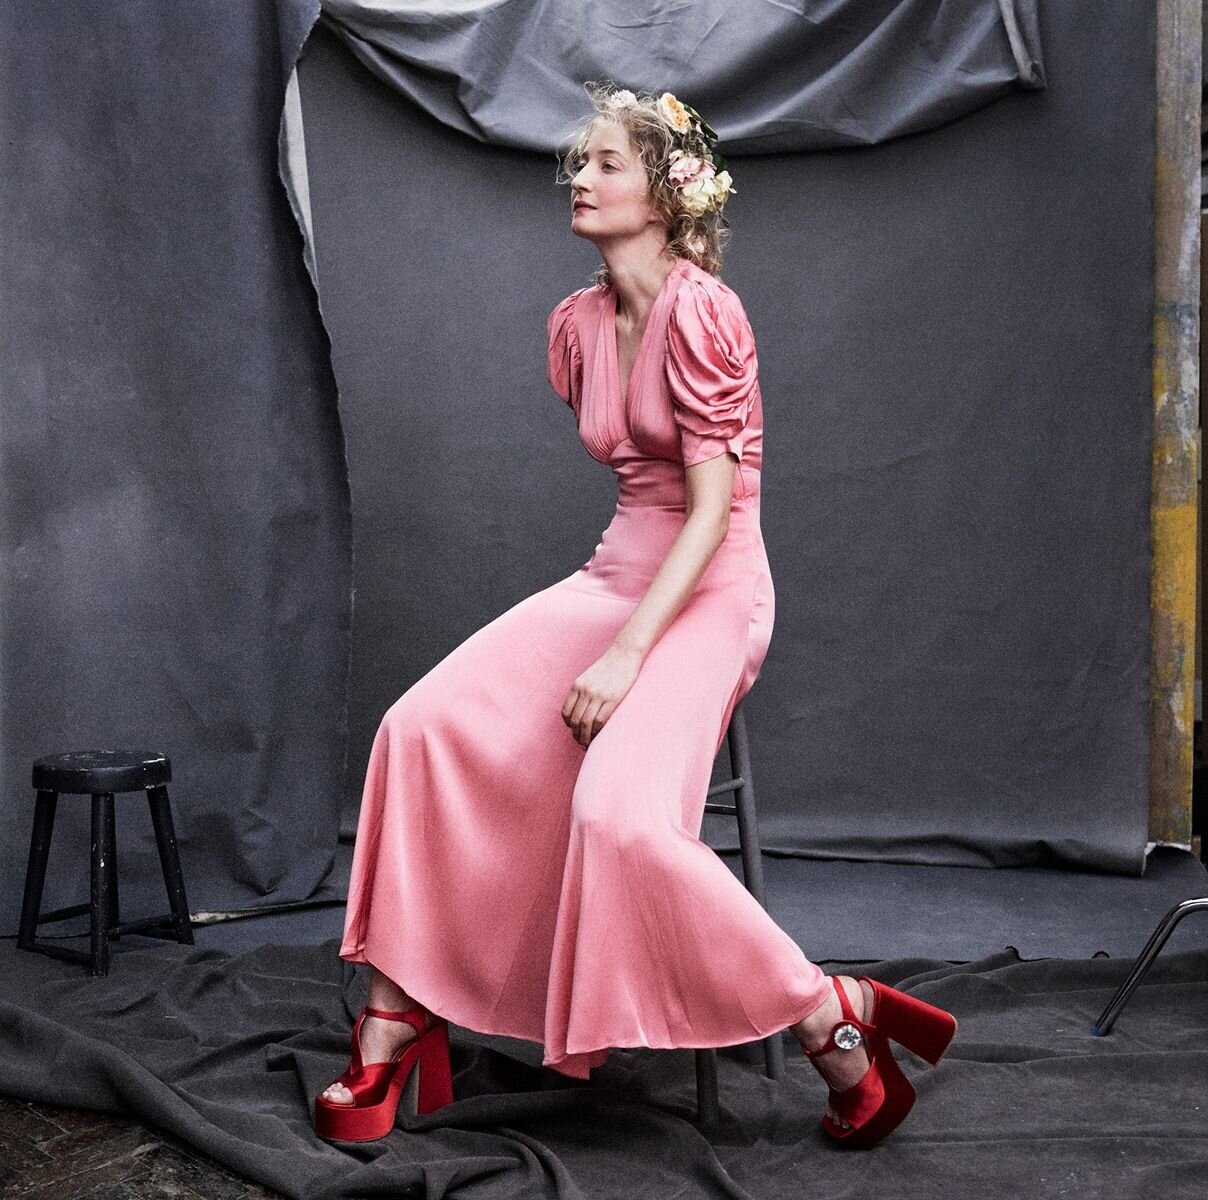 HAPACA - Alba Rohrwacher by Mikael Jansson for Vogue US